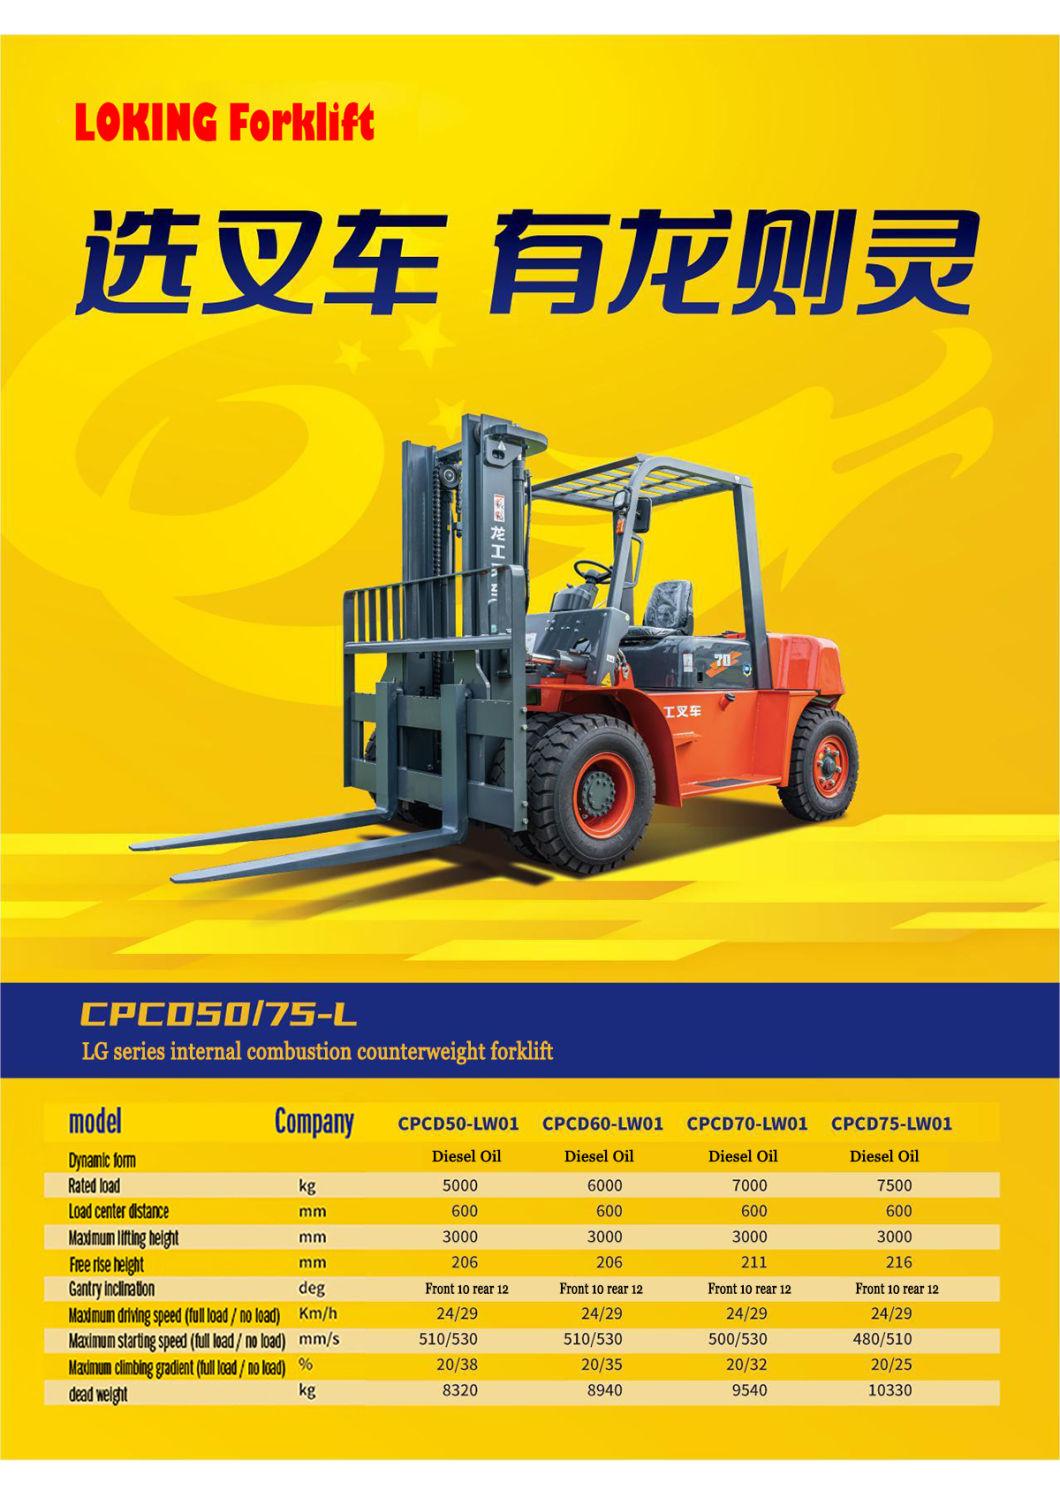 Diesel Forklift Diesel Engine Automatic Transmission 8320/8940/9540/10330 (Kg) Diesel Trucks